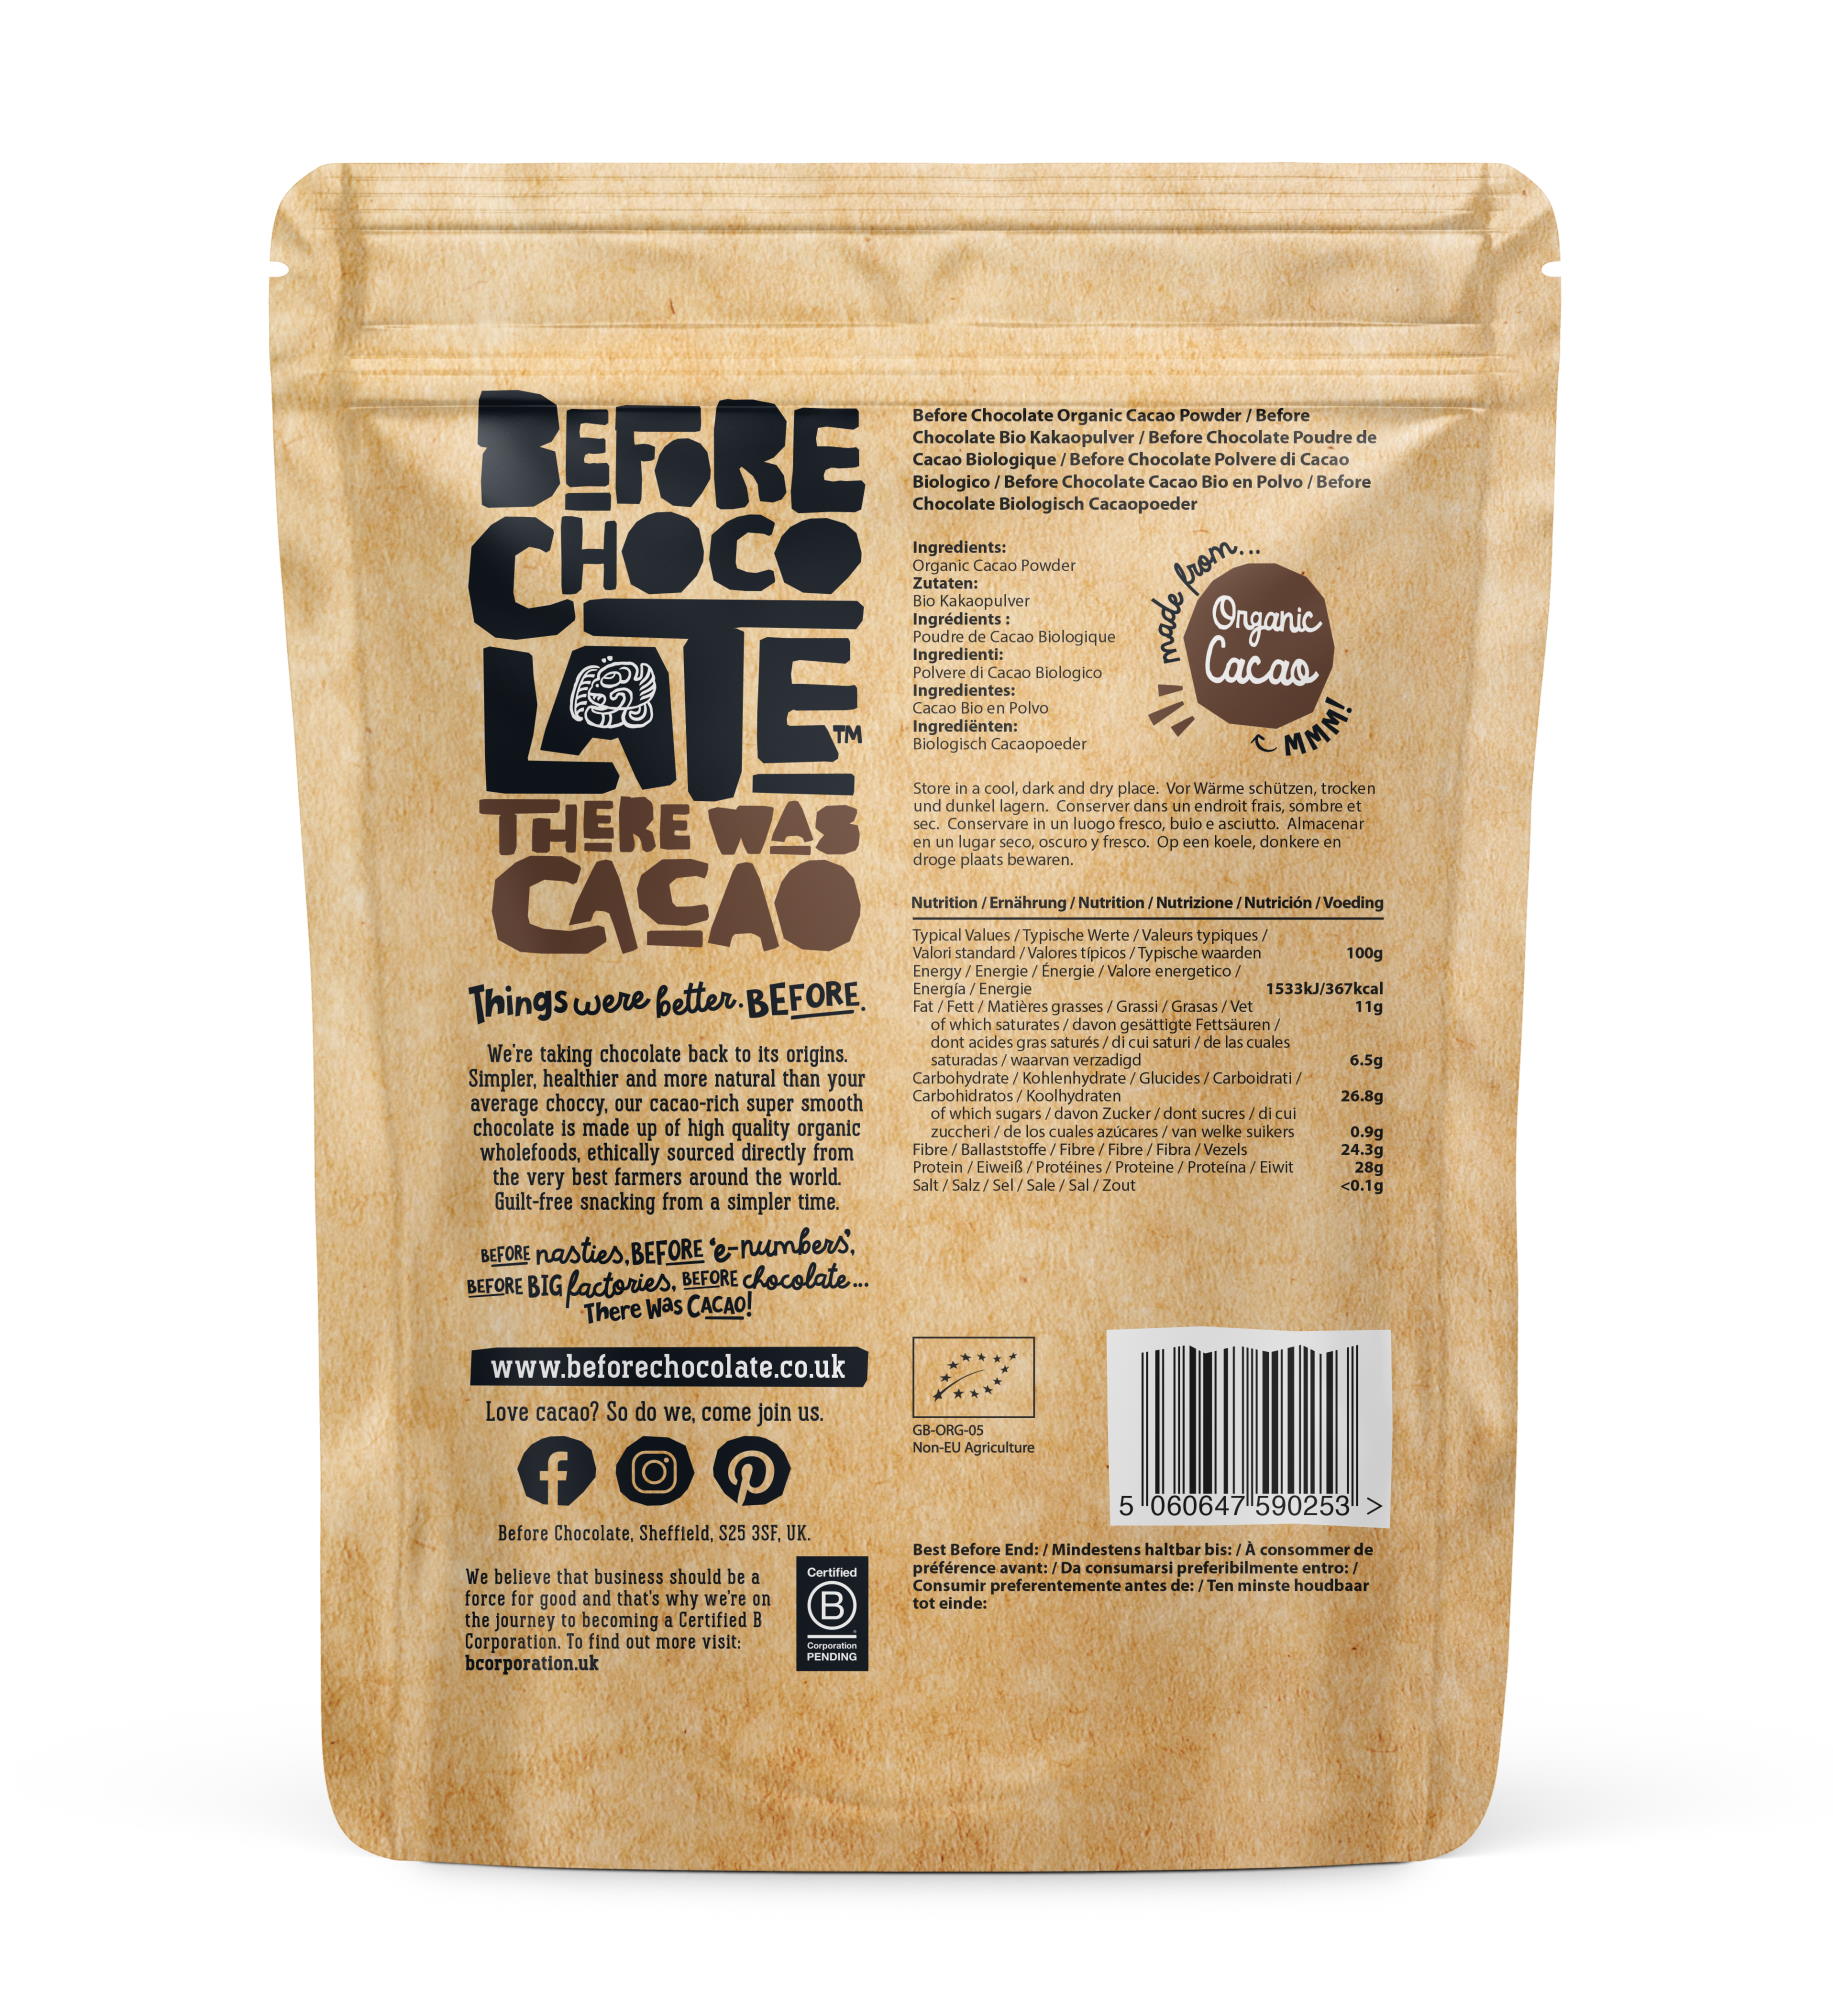 Before Chocolate Organic, Vegan Cacao Powder (Back of Pack)